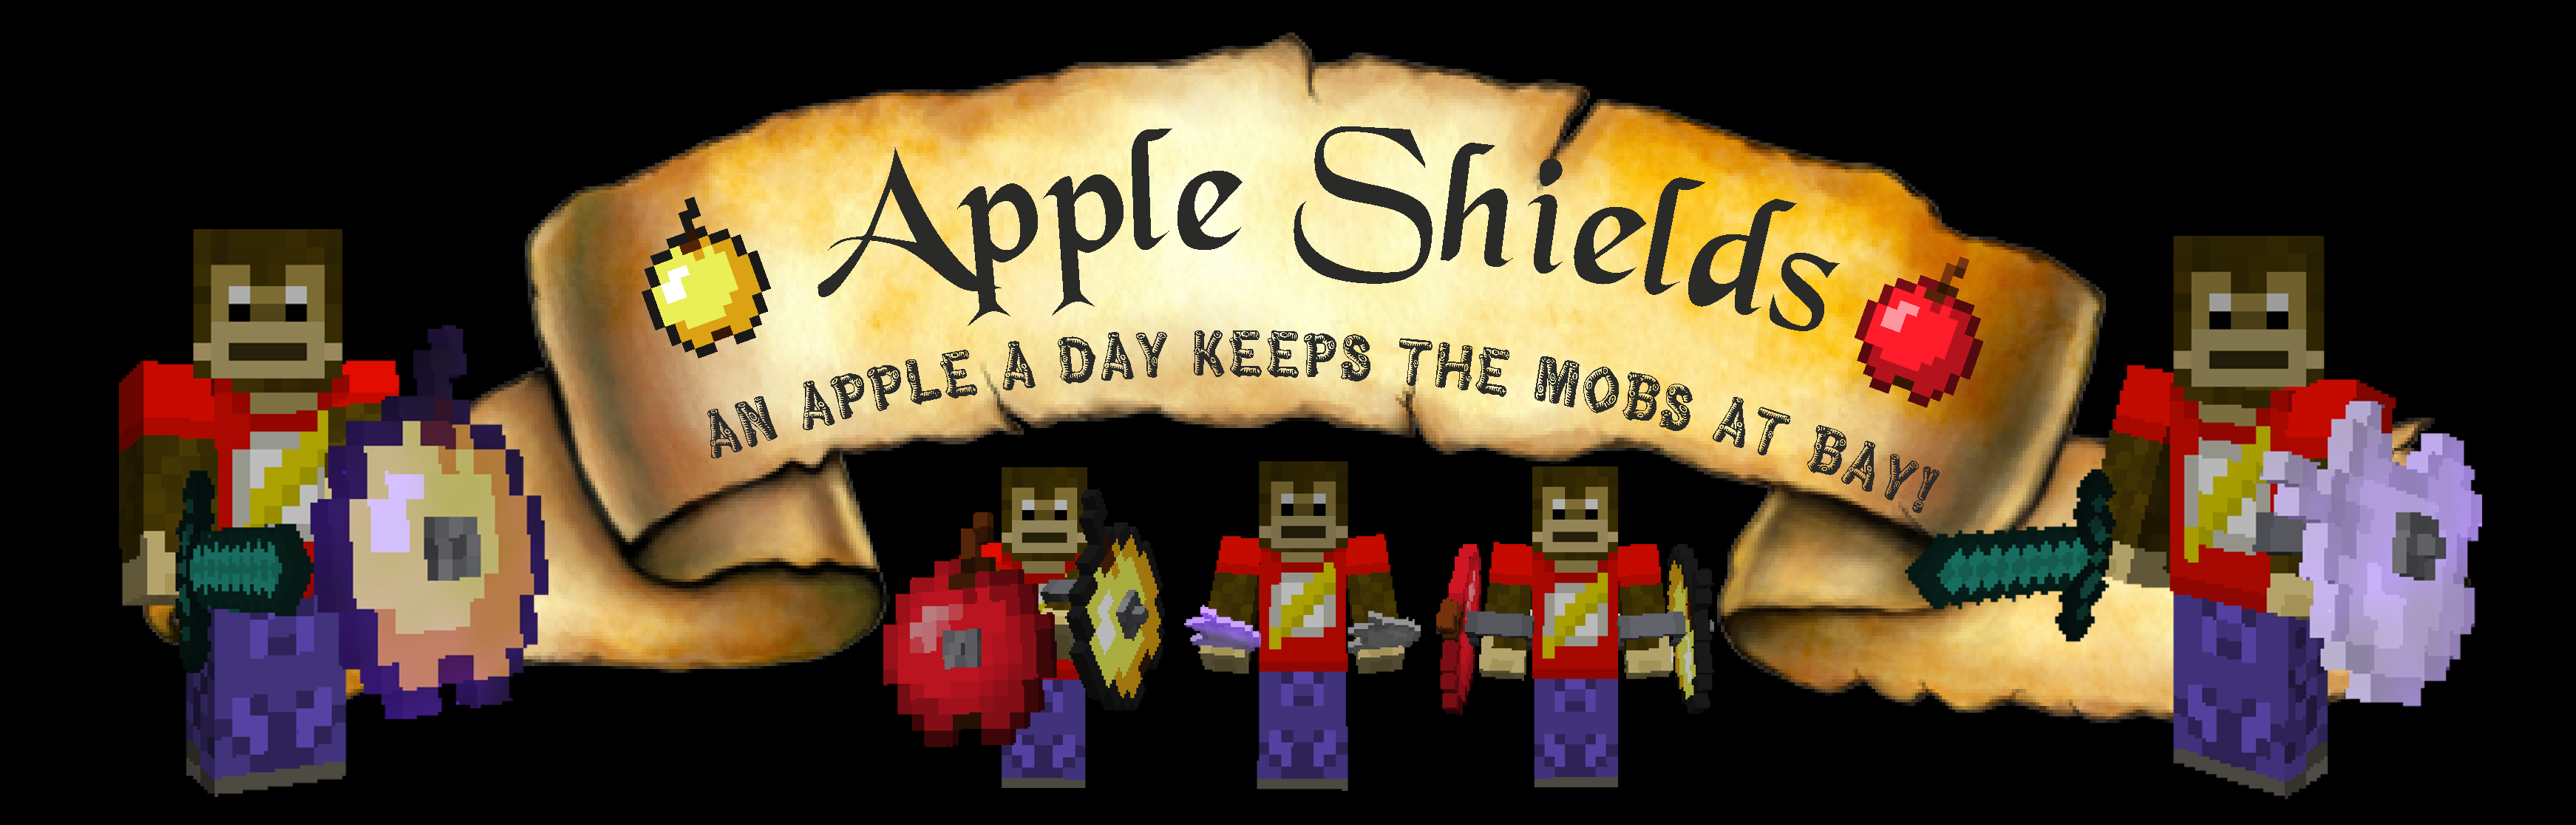 Apple Shields screenshot 1